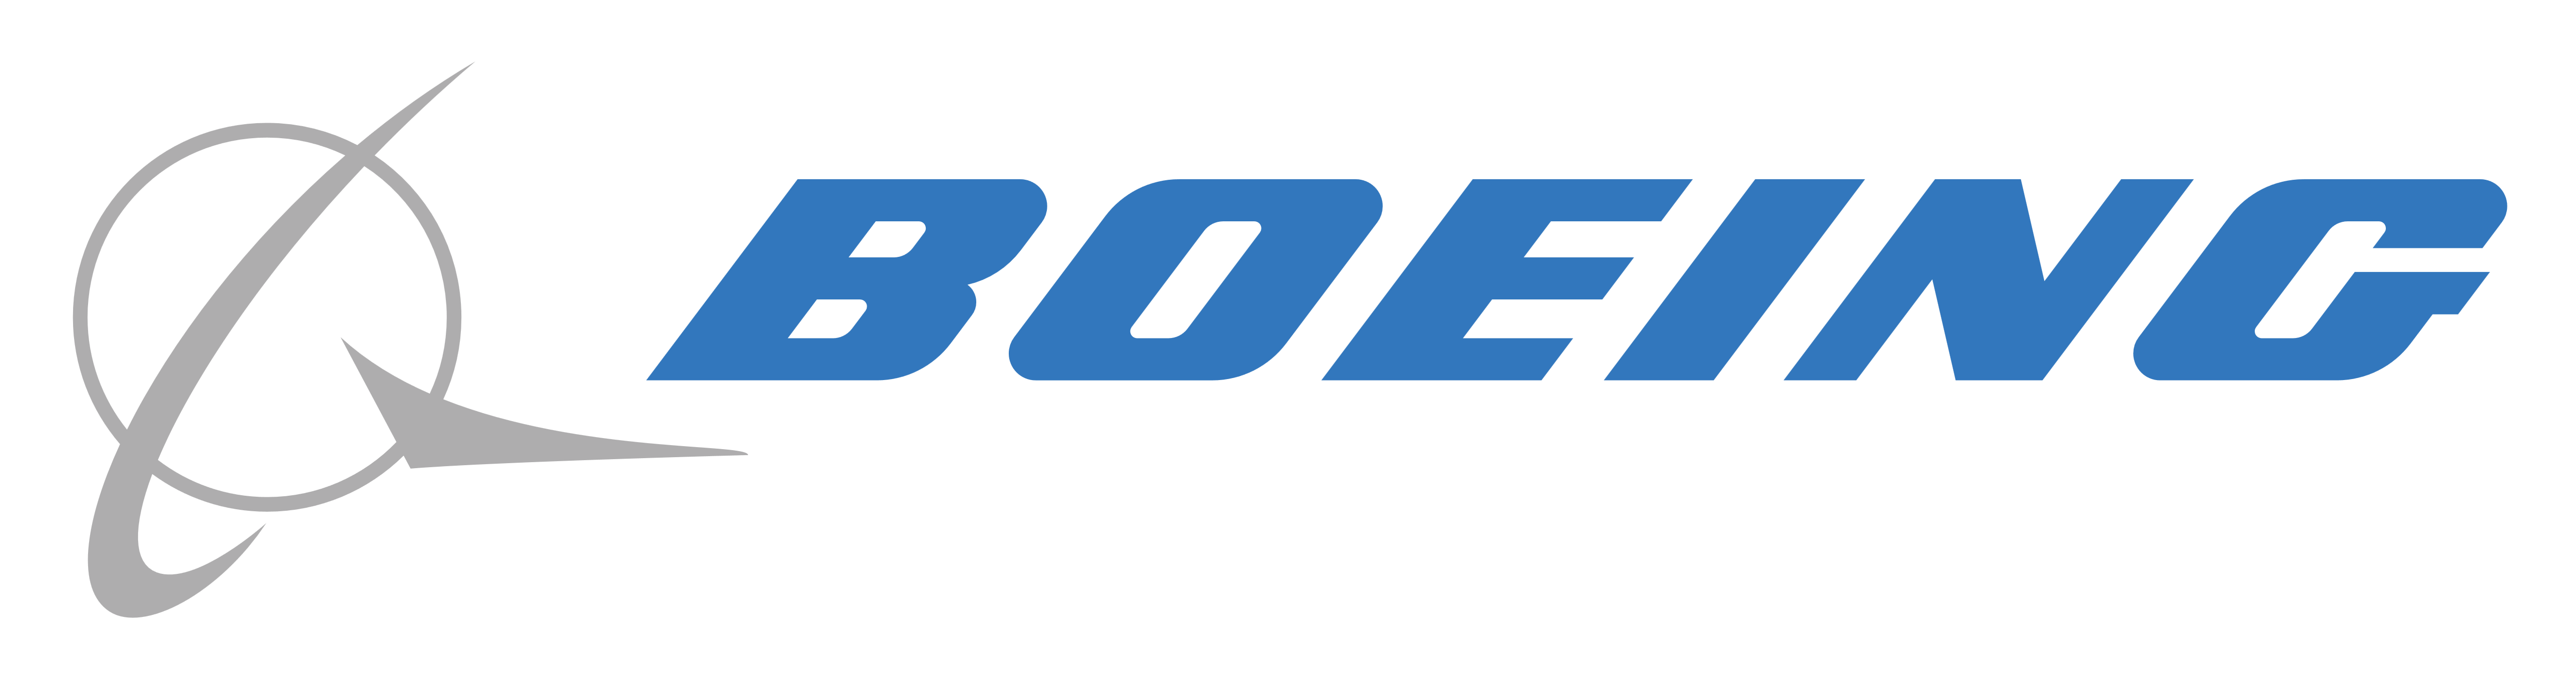 Boeing Logo Vector PNG - 101617